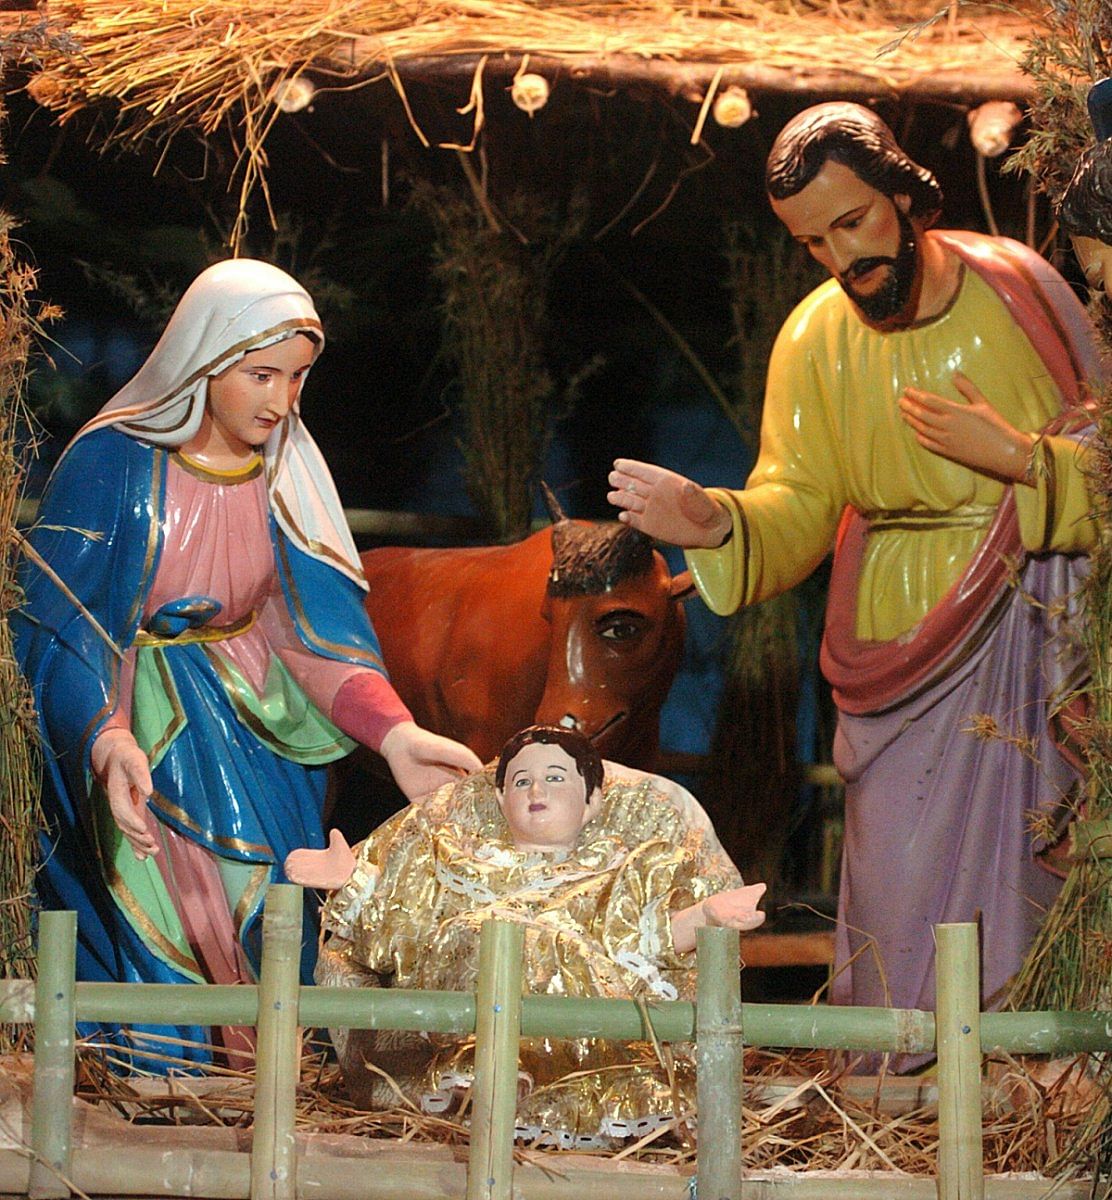 A Christmas manger set up in Bengaluru